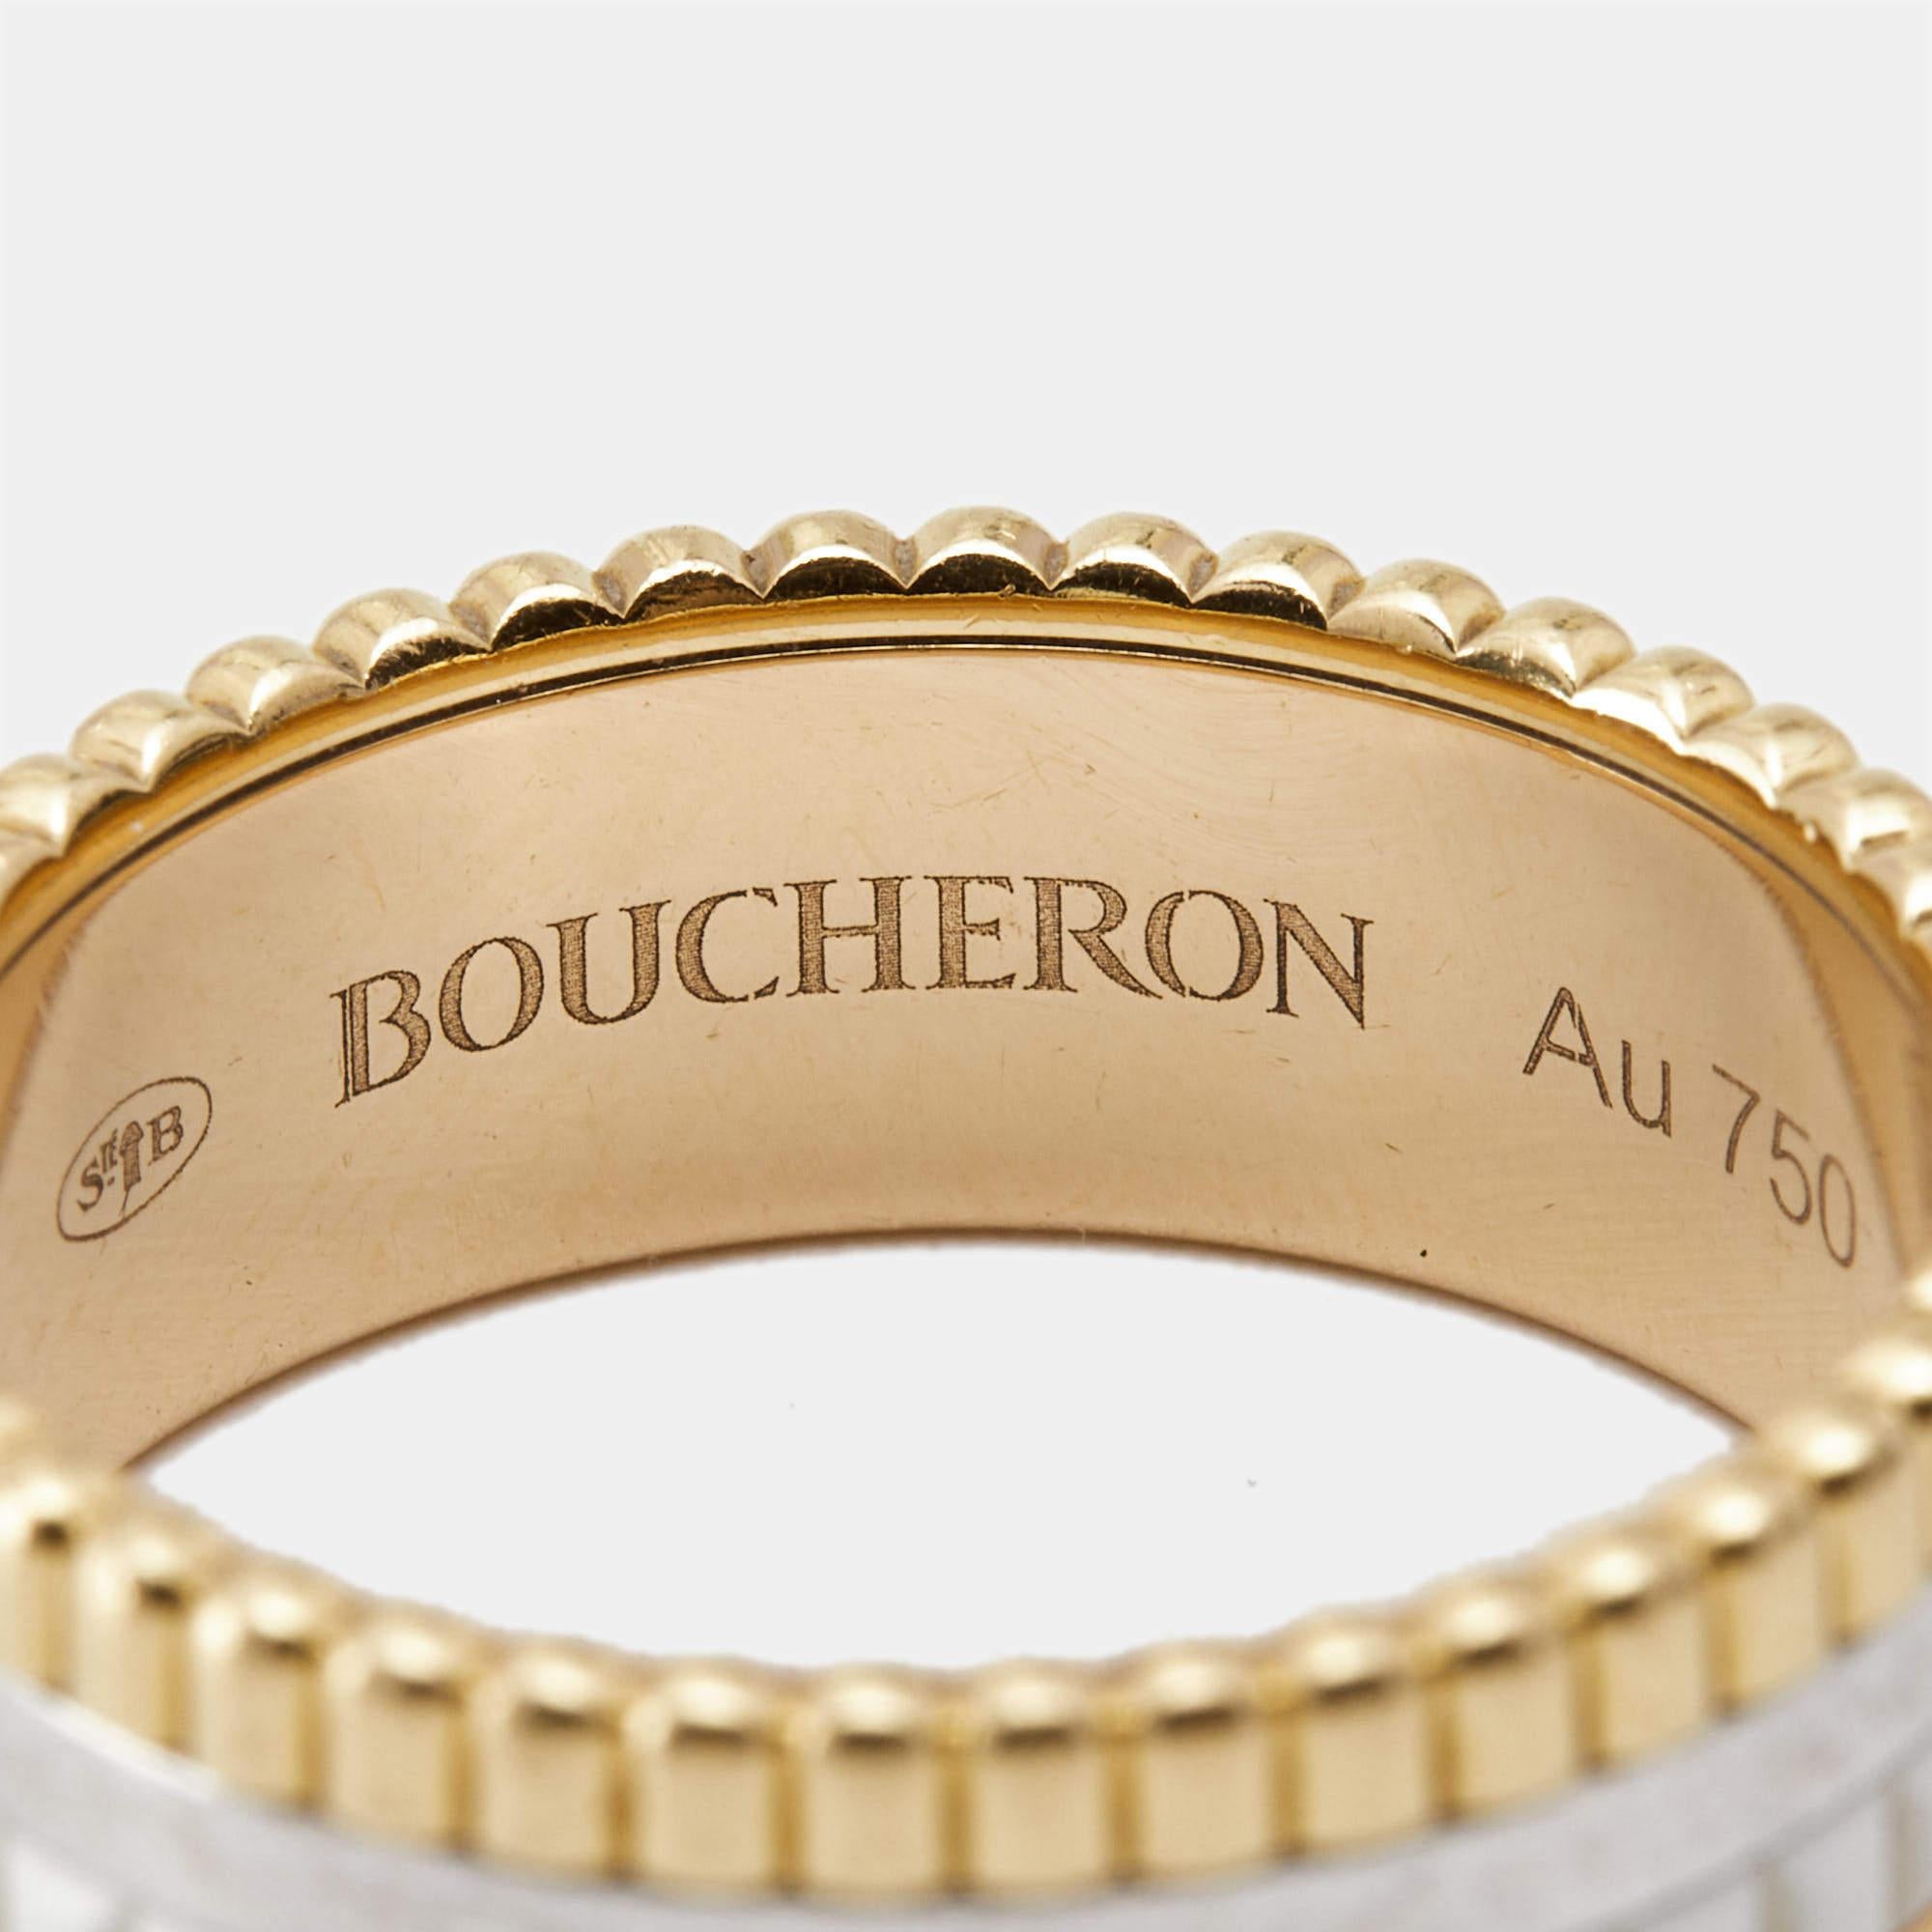 Boucheron Quatre Classique White Edition Ceramic 18k Three Tone Gold Ring Size 5 2